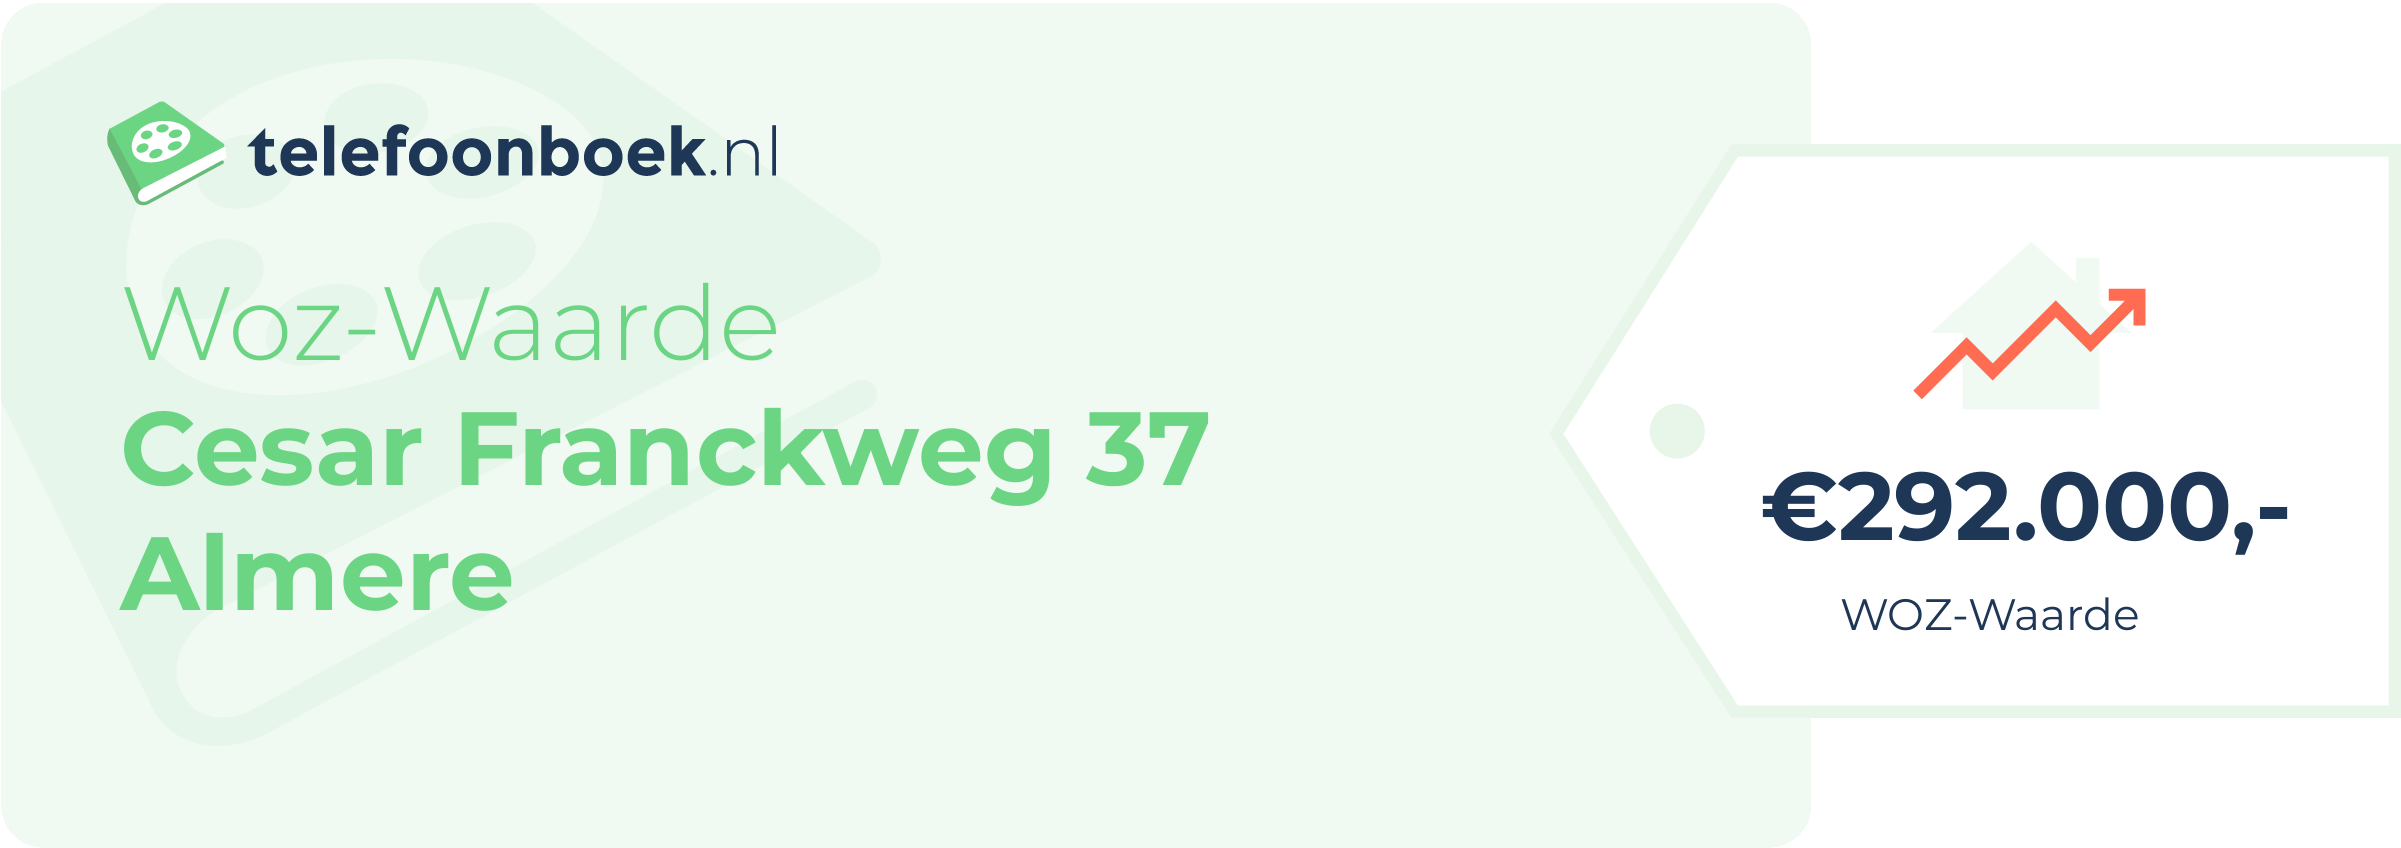 WOZ-waarde Cesar Franckweg 37 Almere